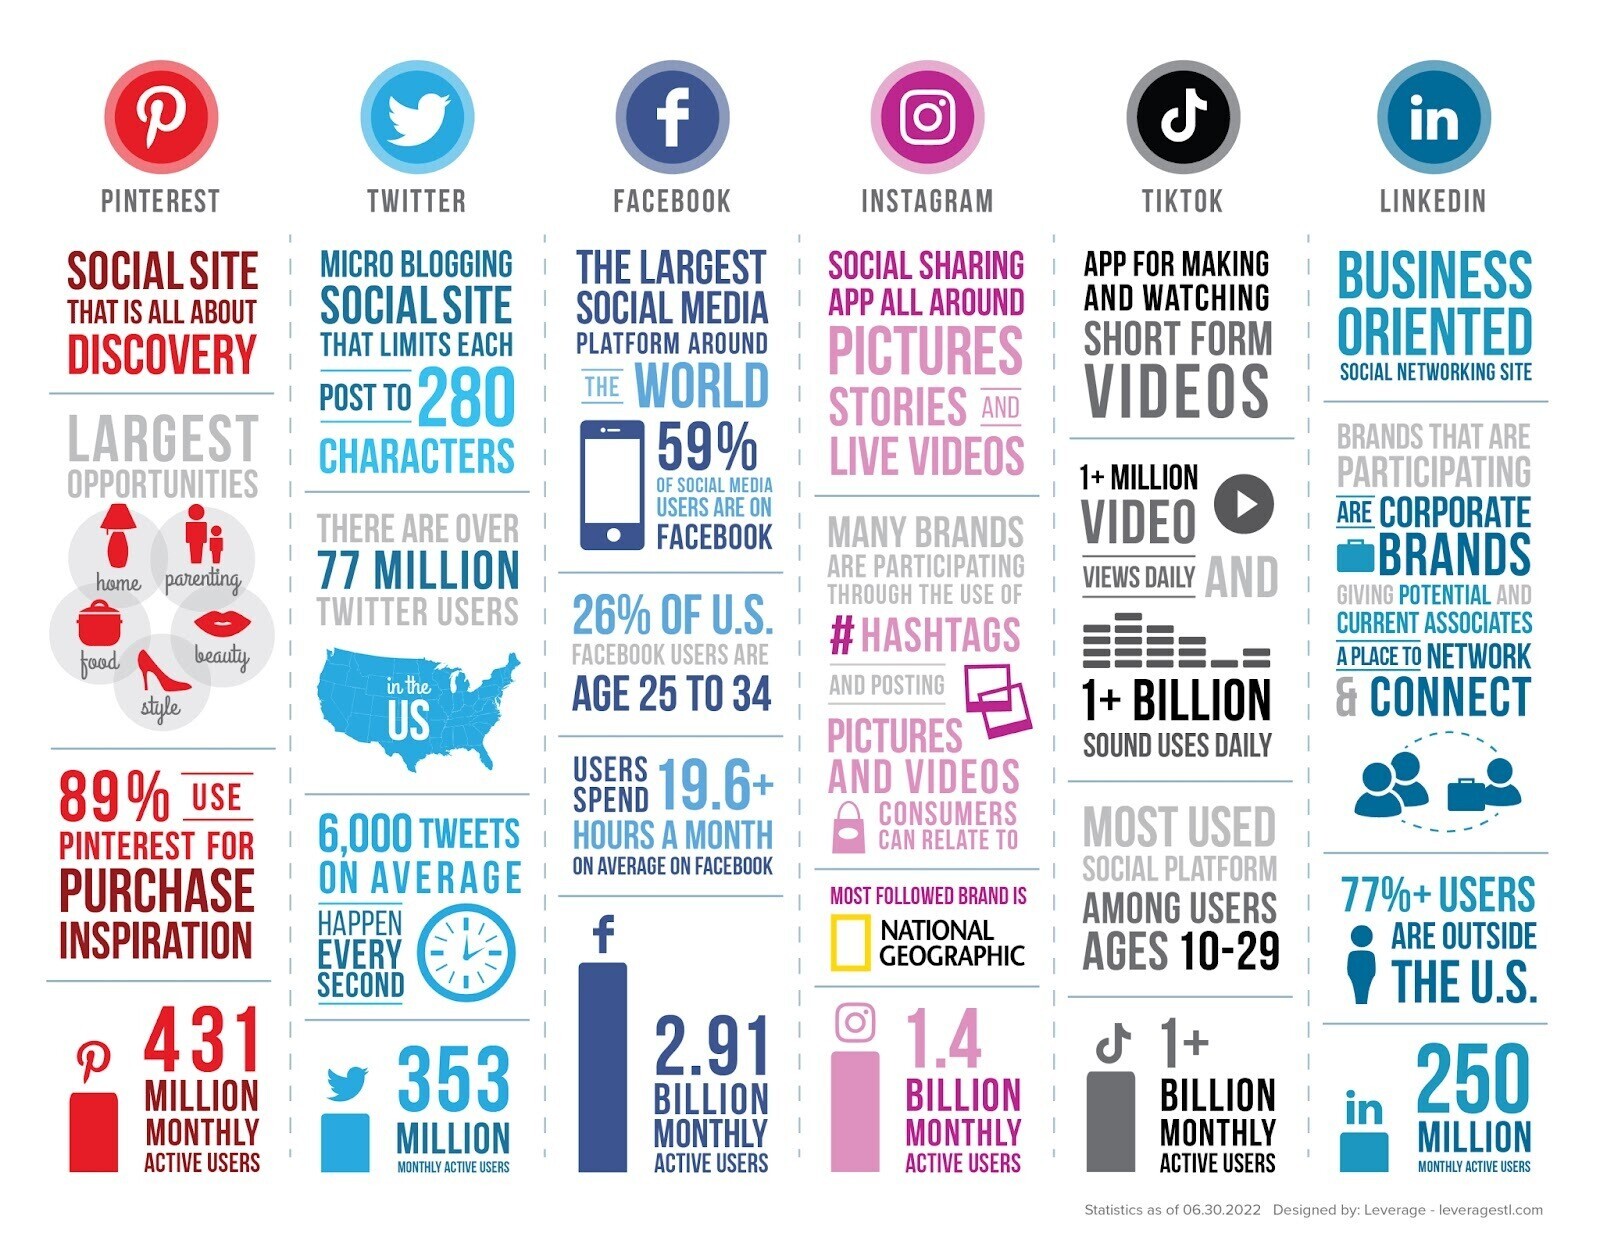 Leverage's infographic comparing most popular social media platforms